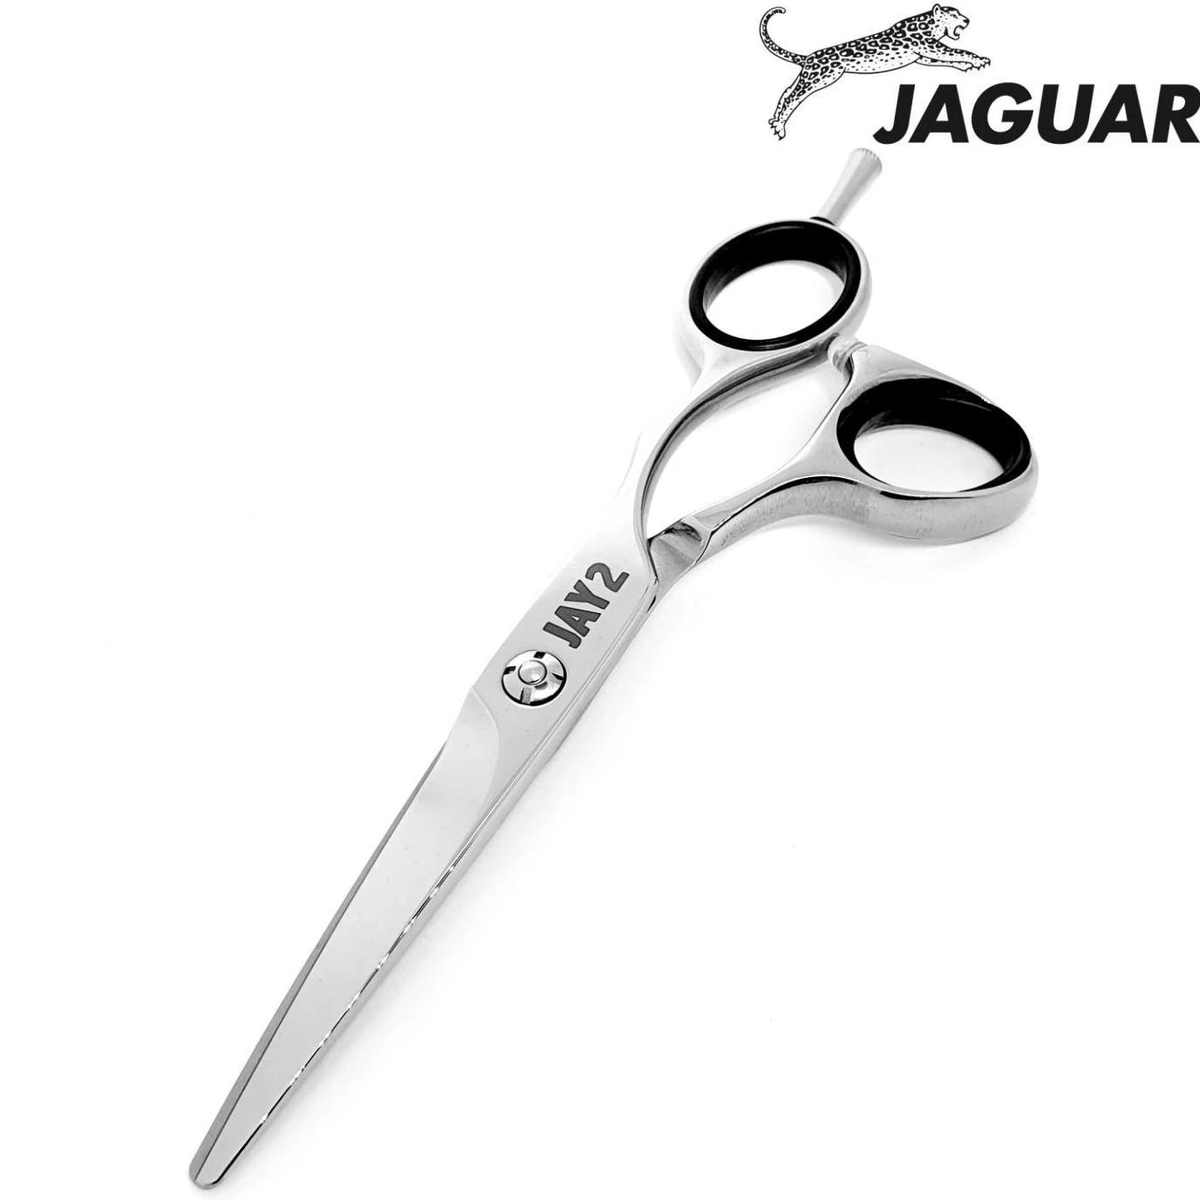 Jaguar Jay 2 Hair Cutting Scissors